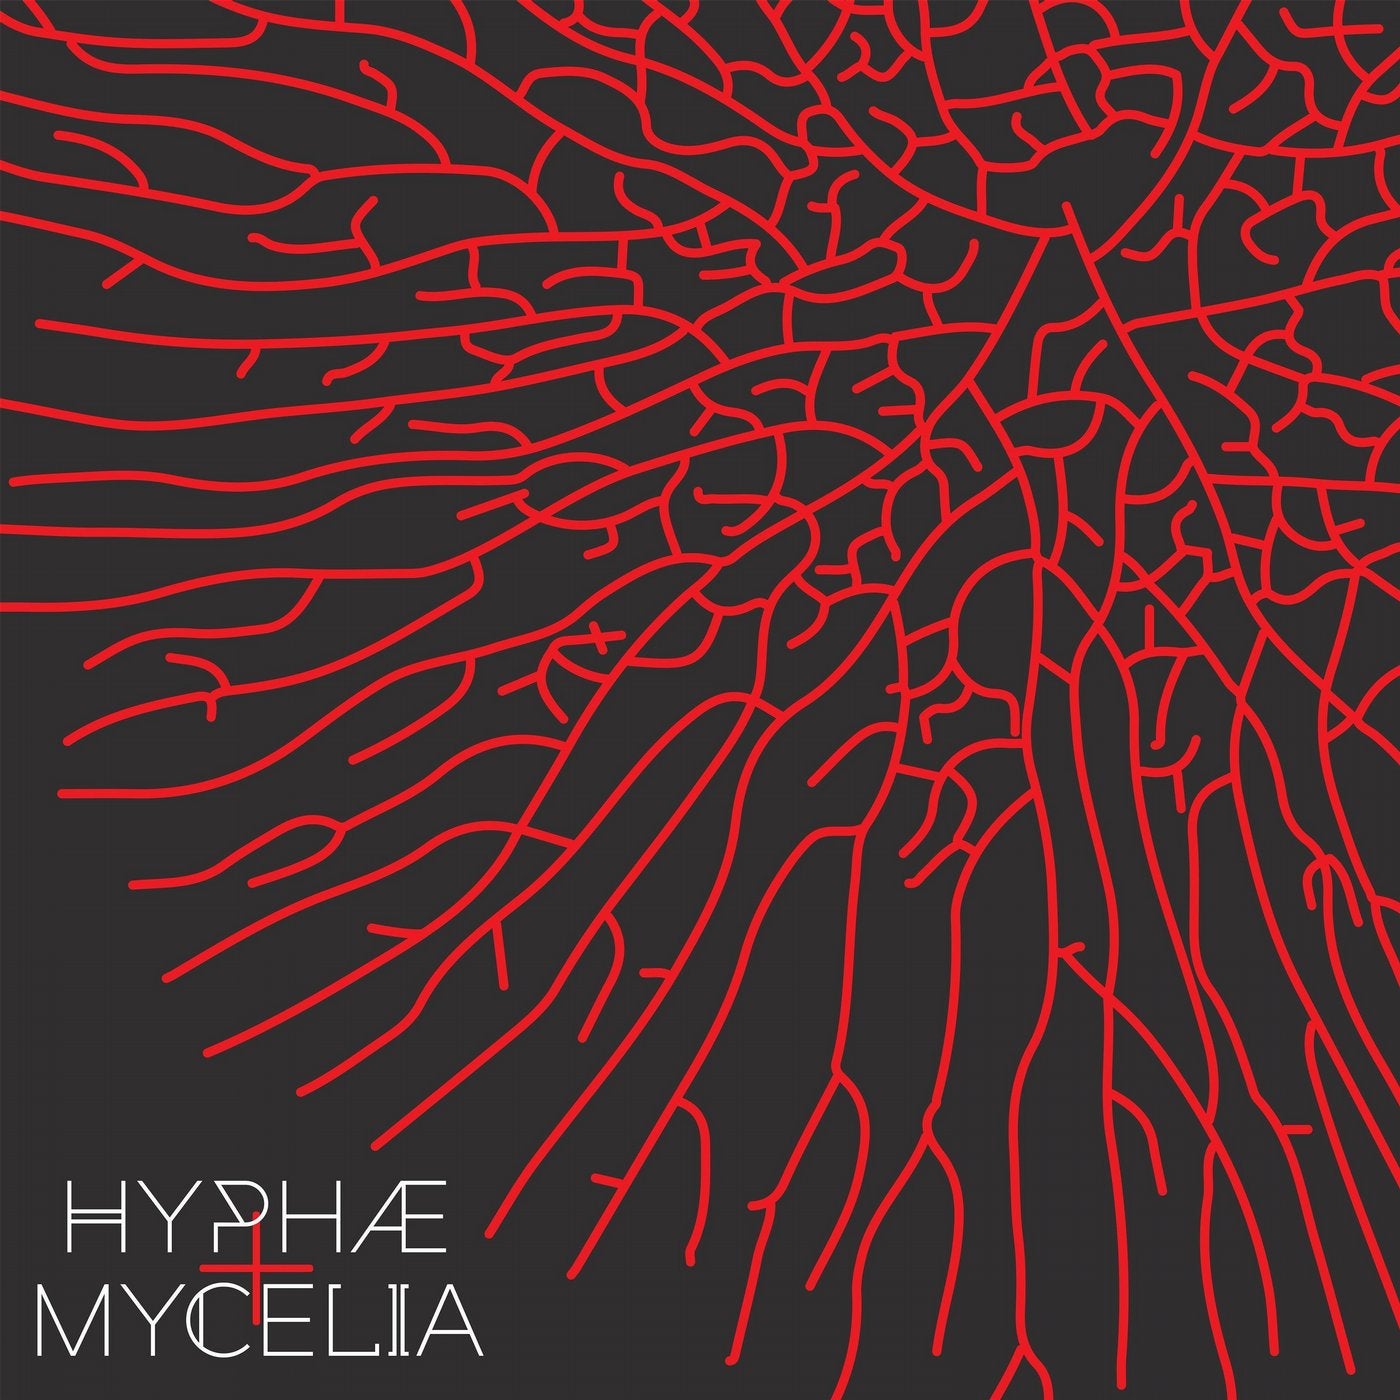 Hyphae+ Mycelia